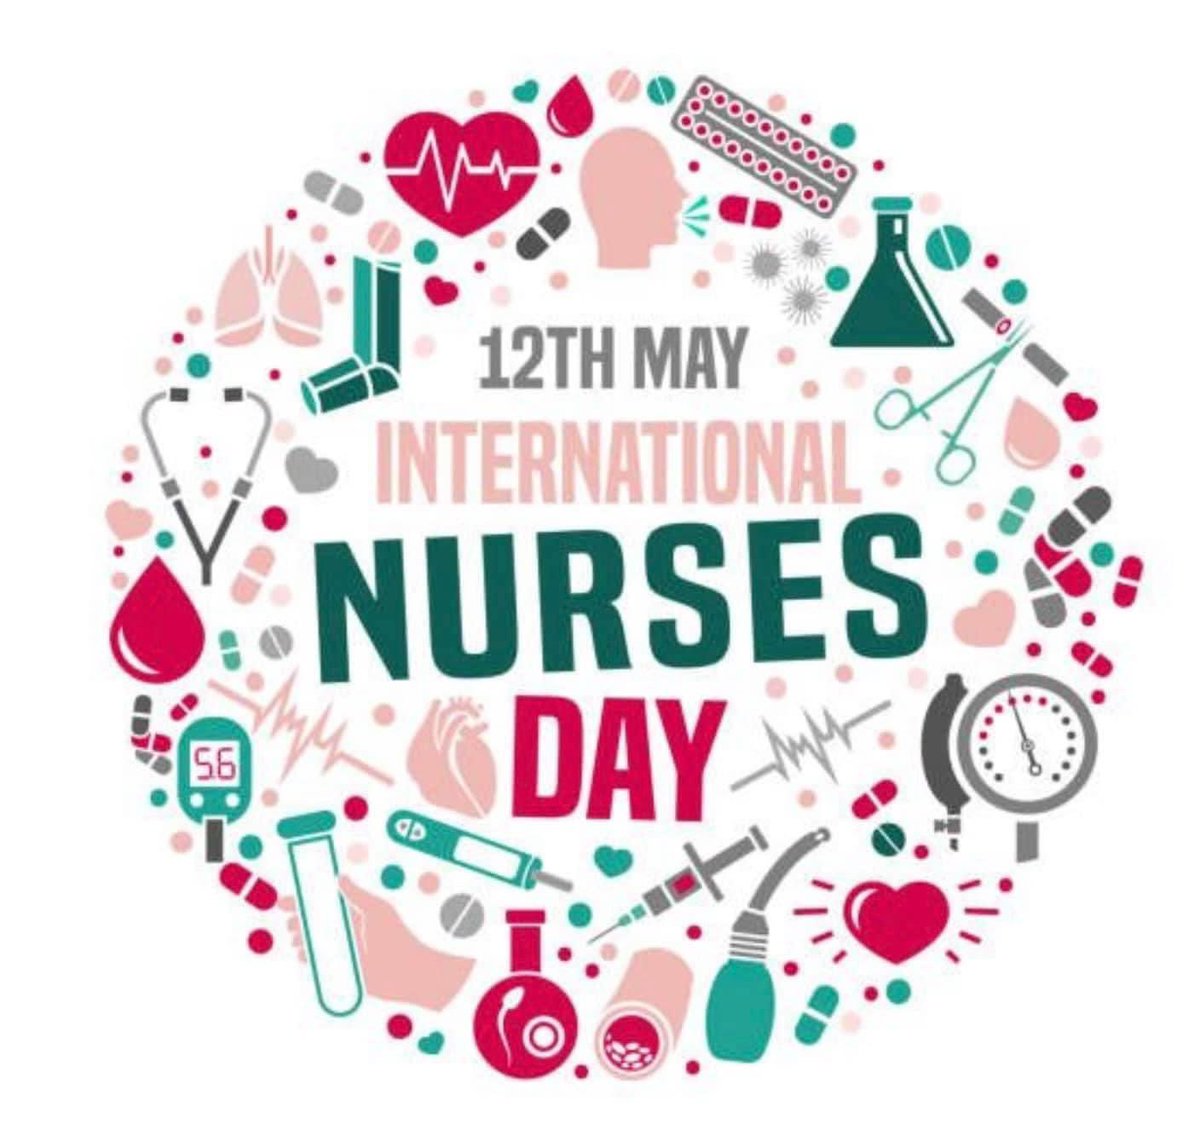 Happy International Nurses day to all my work friends and colleagues. #internationalnursesday #NRU #QEUH